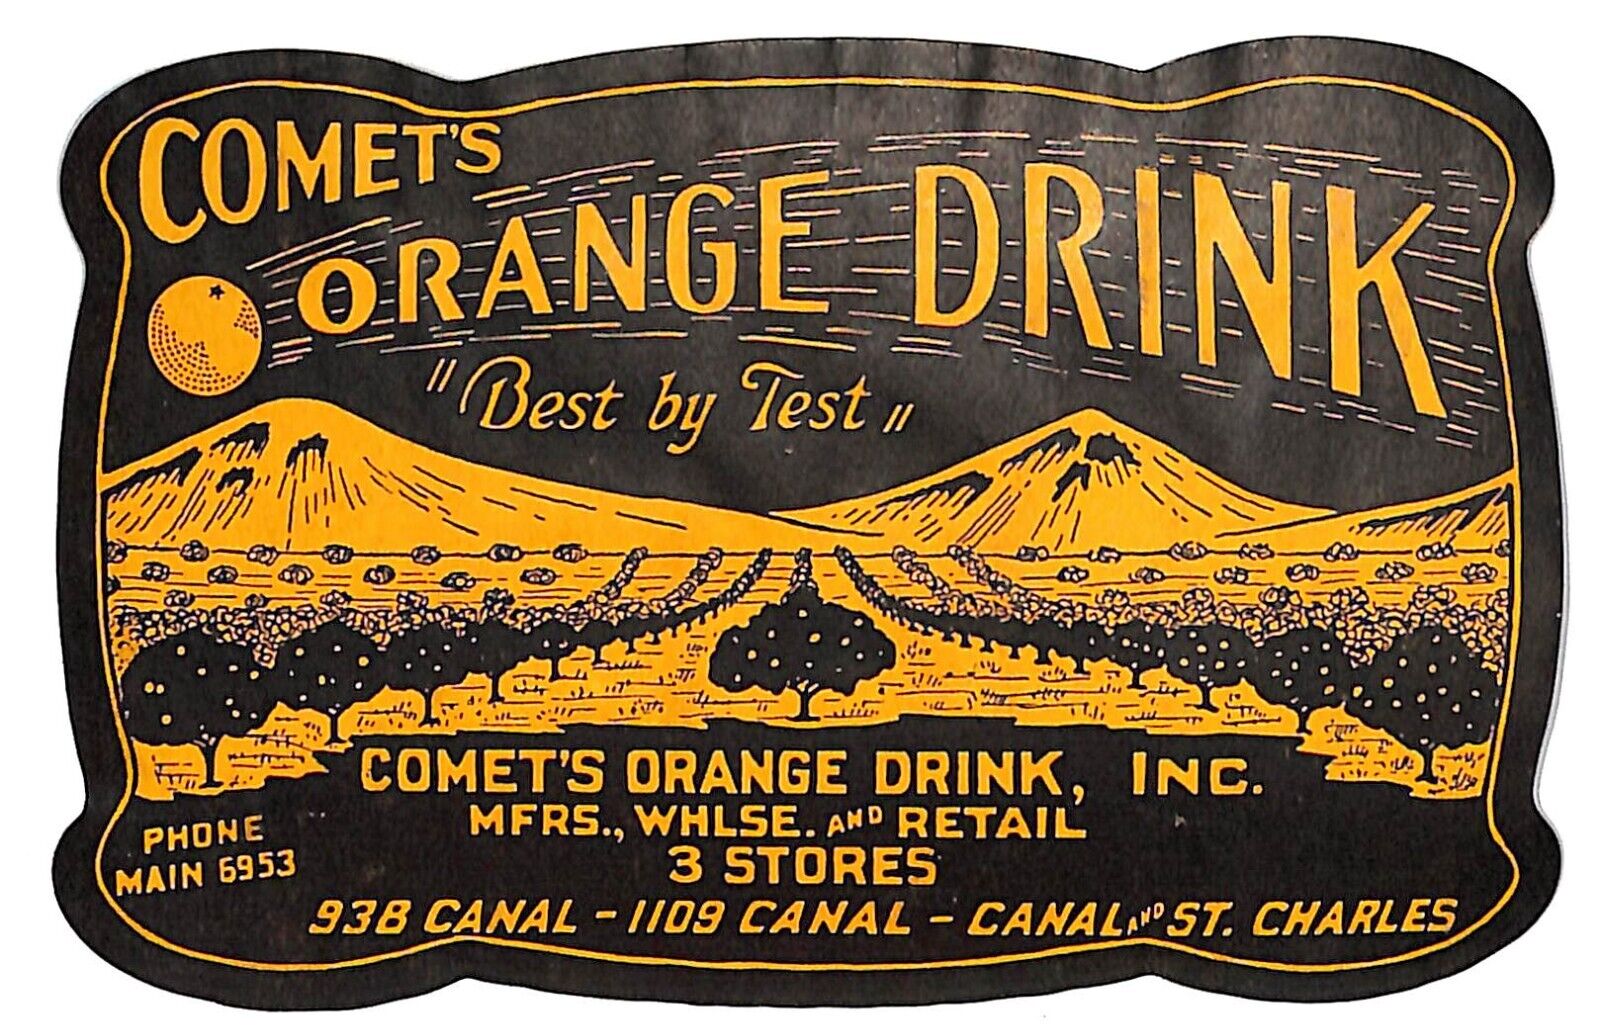 Comets Orange Drink New Orleans Paper Soda Label c1920-25 Very Scarce